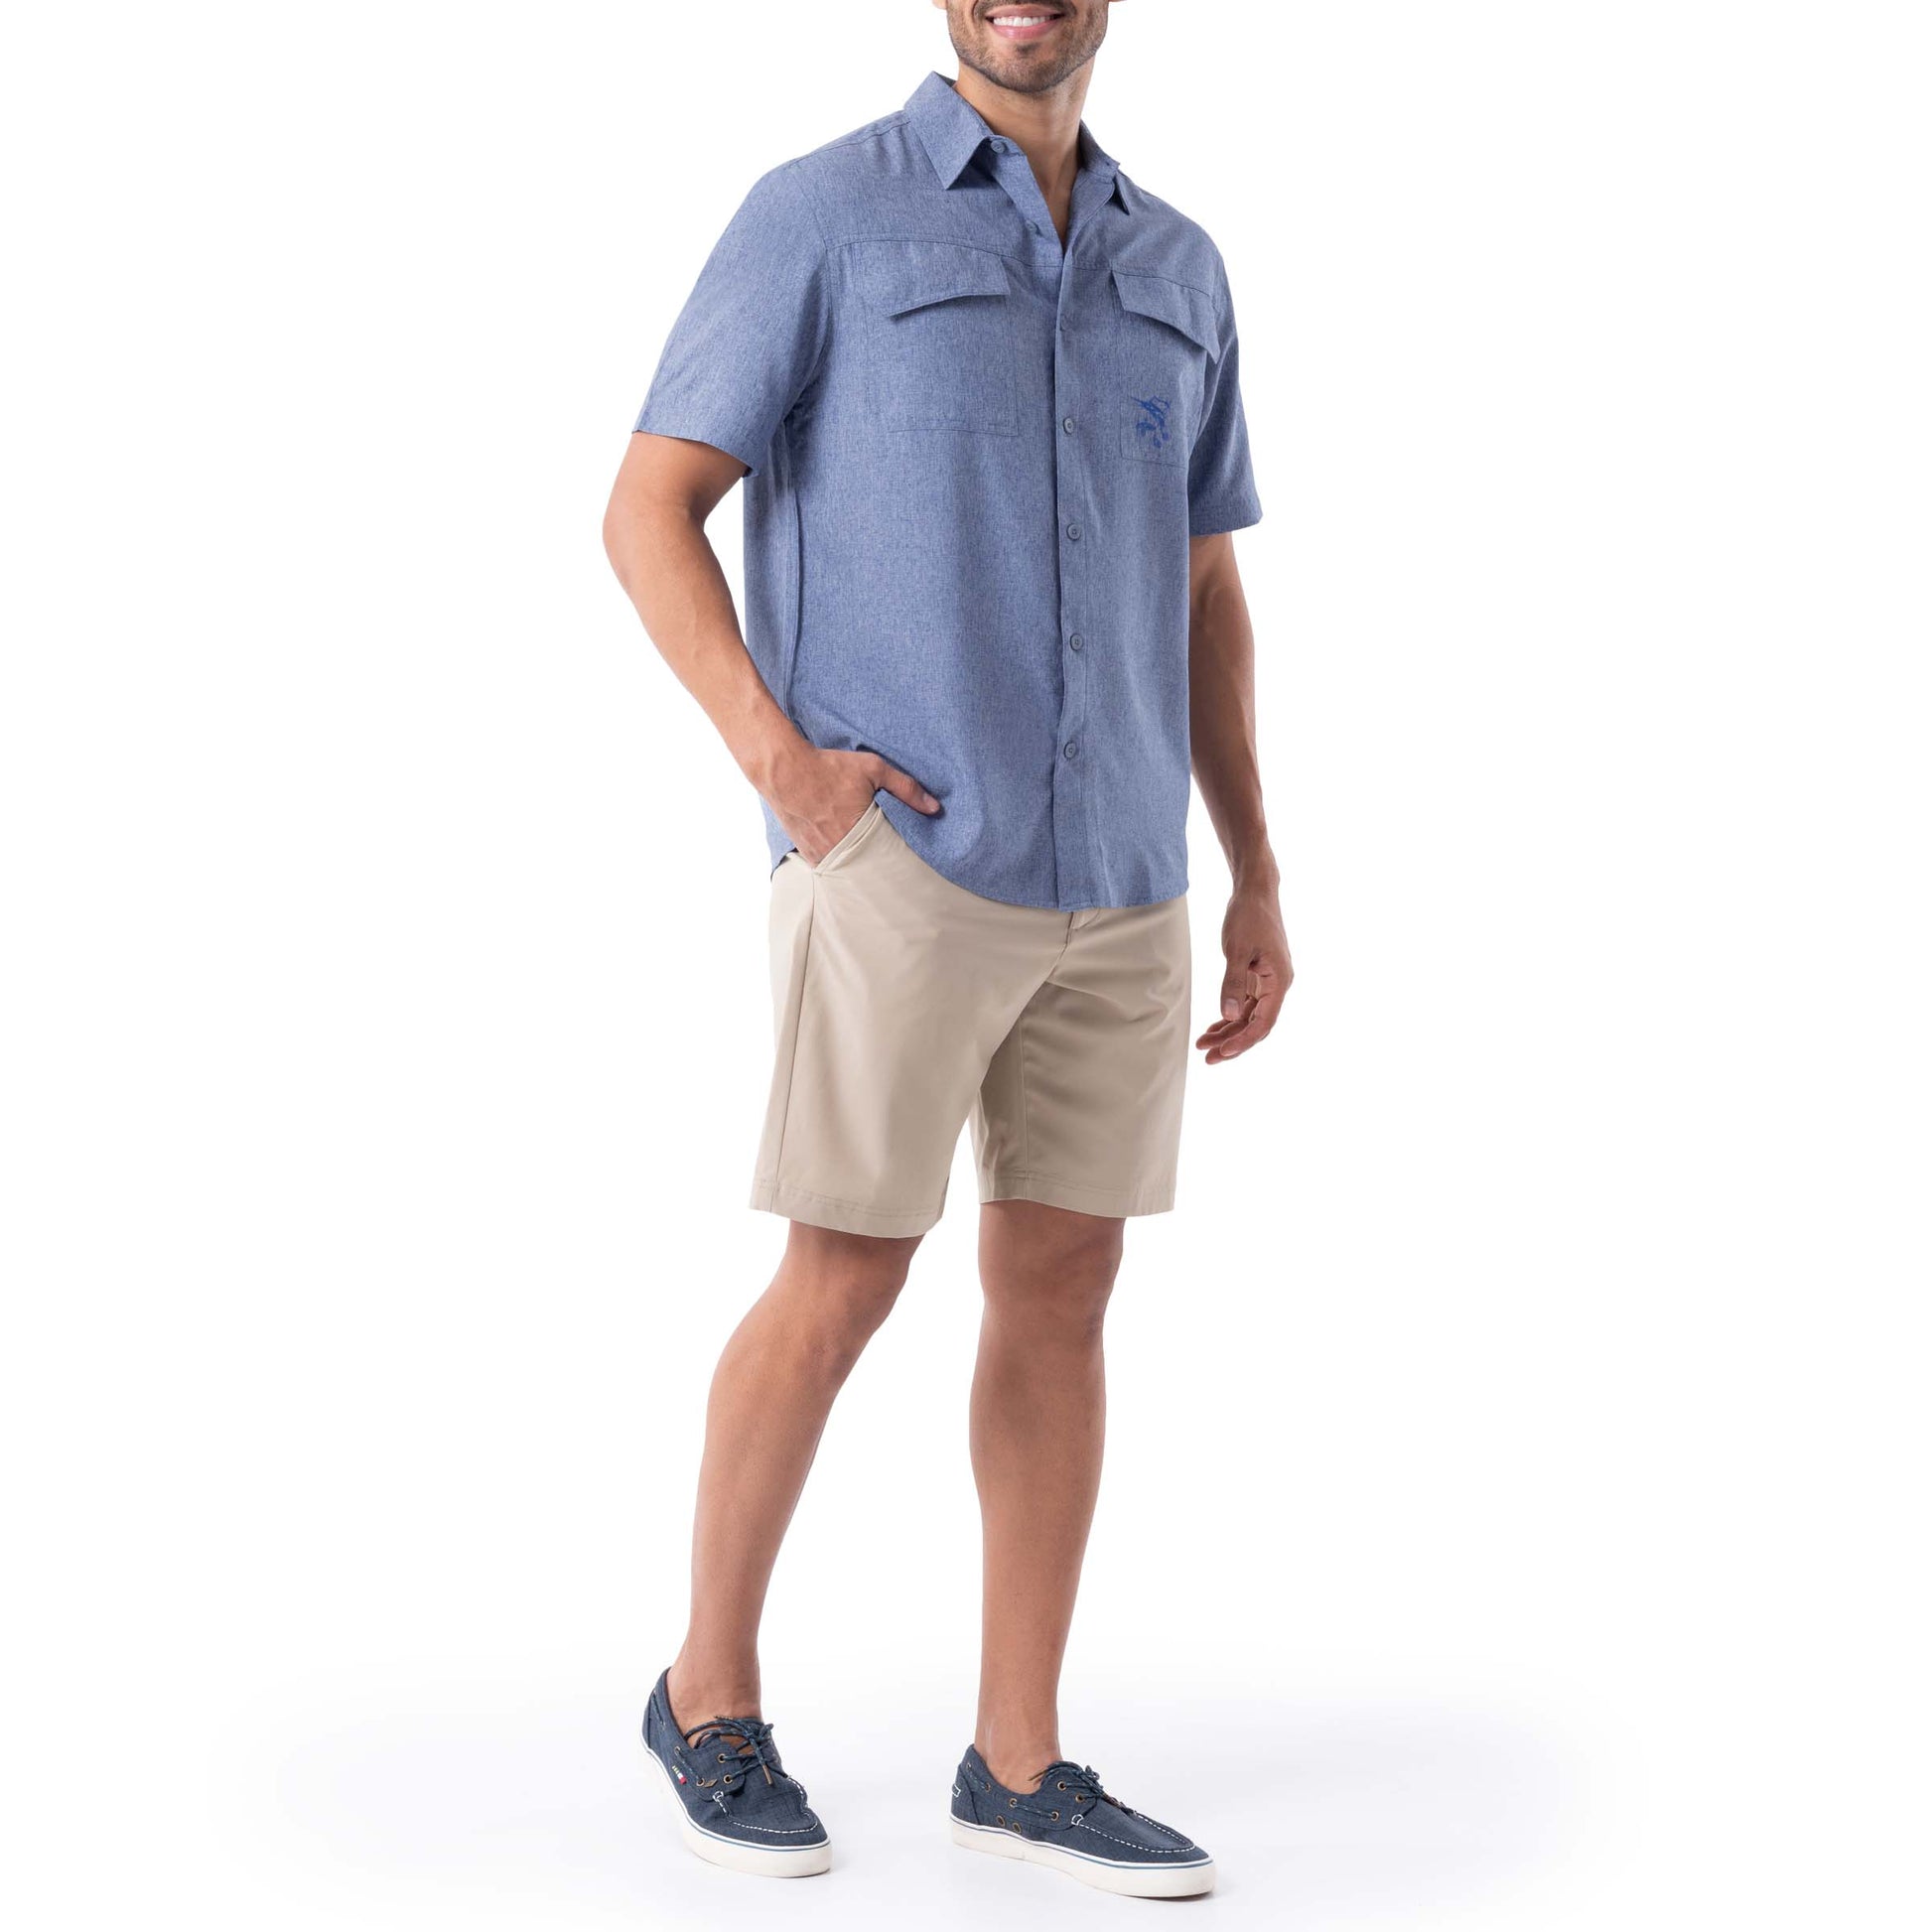 Men's Short Sleeve Heather Textured Fishing Shirt